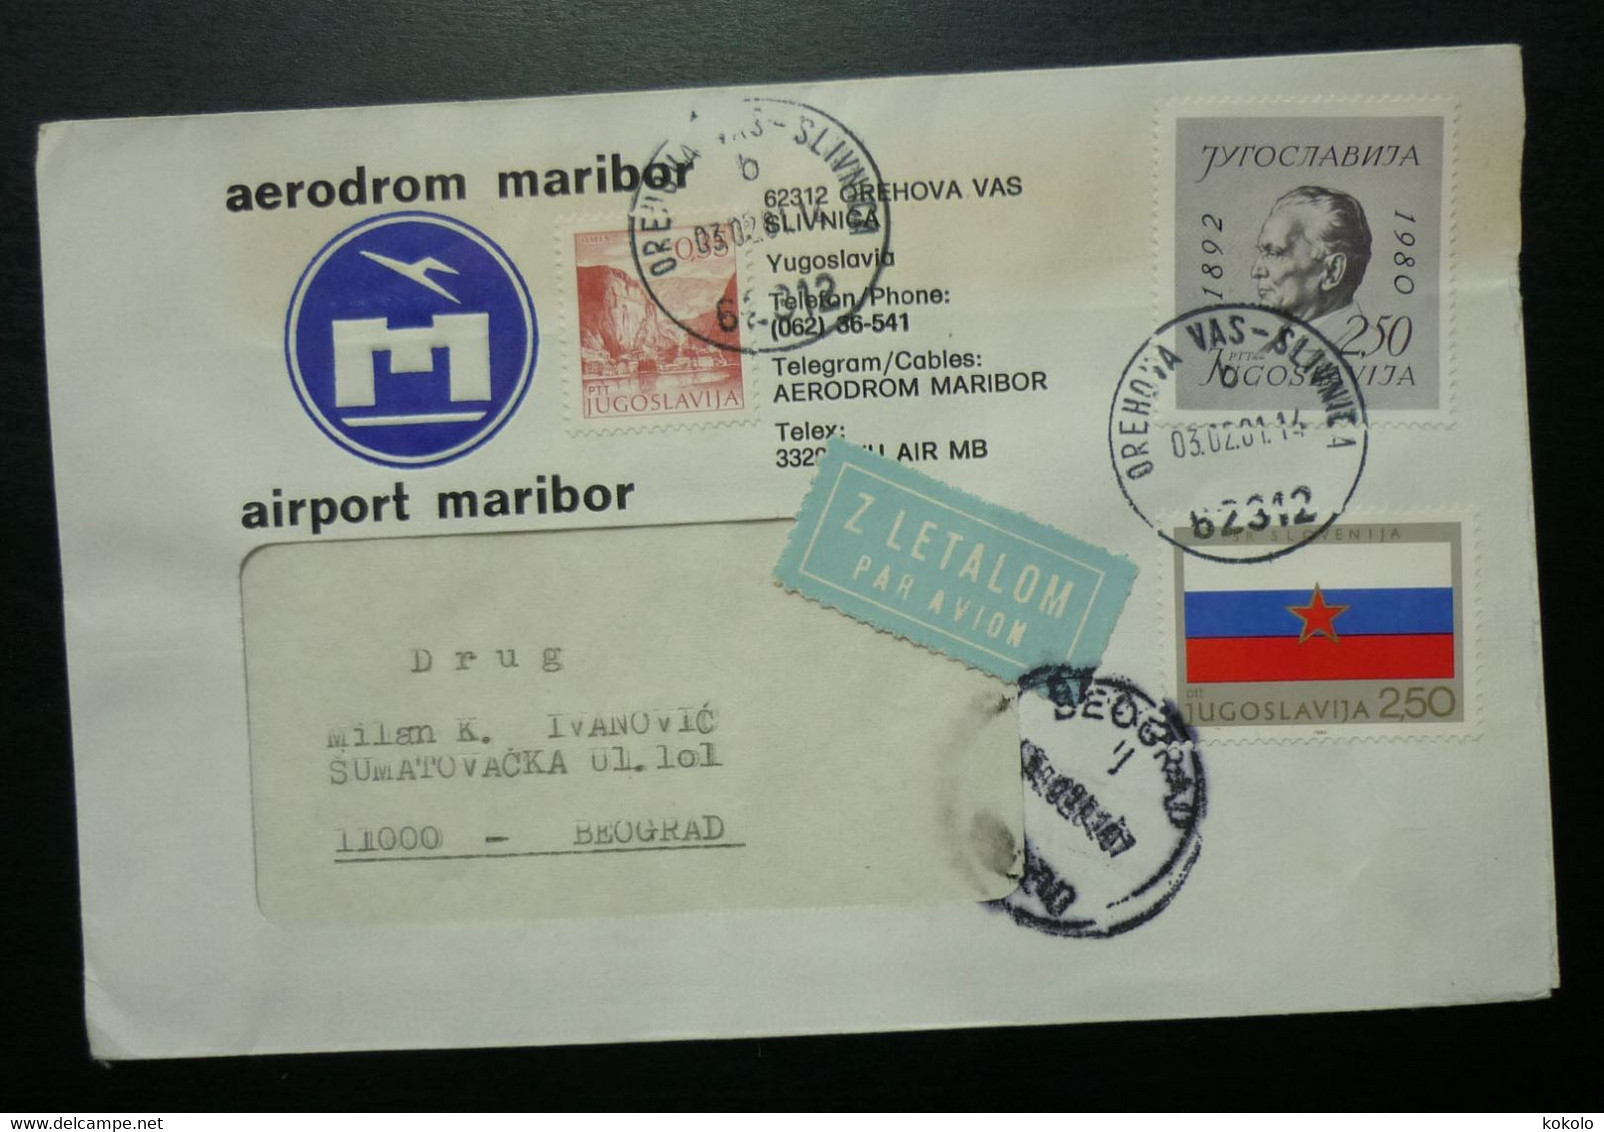 Yugoslavia 1981 - Airport Airmail Cover - Sent From Maribor Slovenia To Beograd Serbia - Orehova Vas Slivnica BH1 - Storia Postale